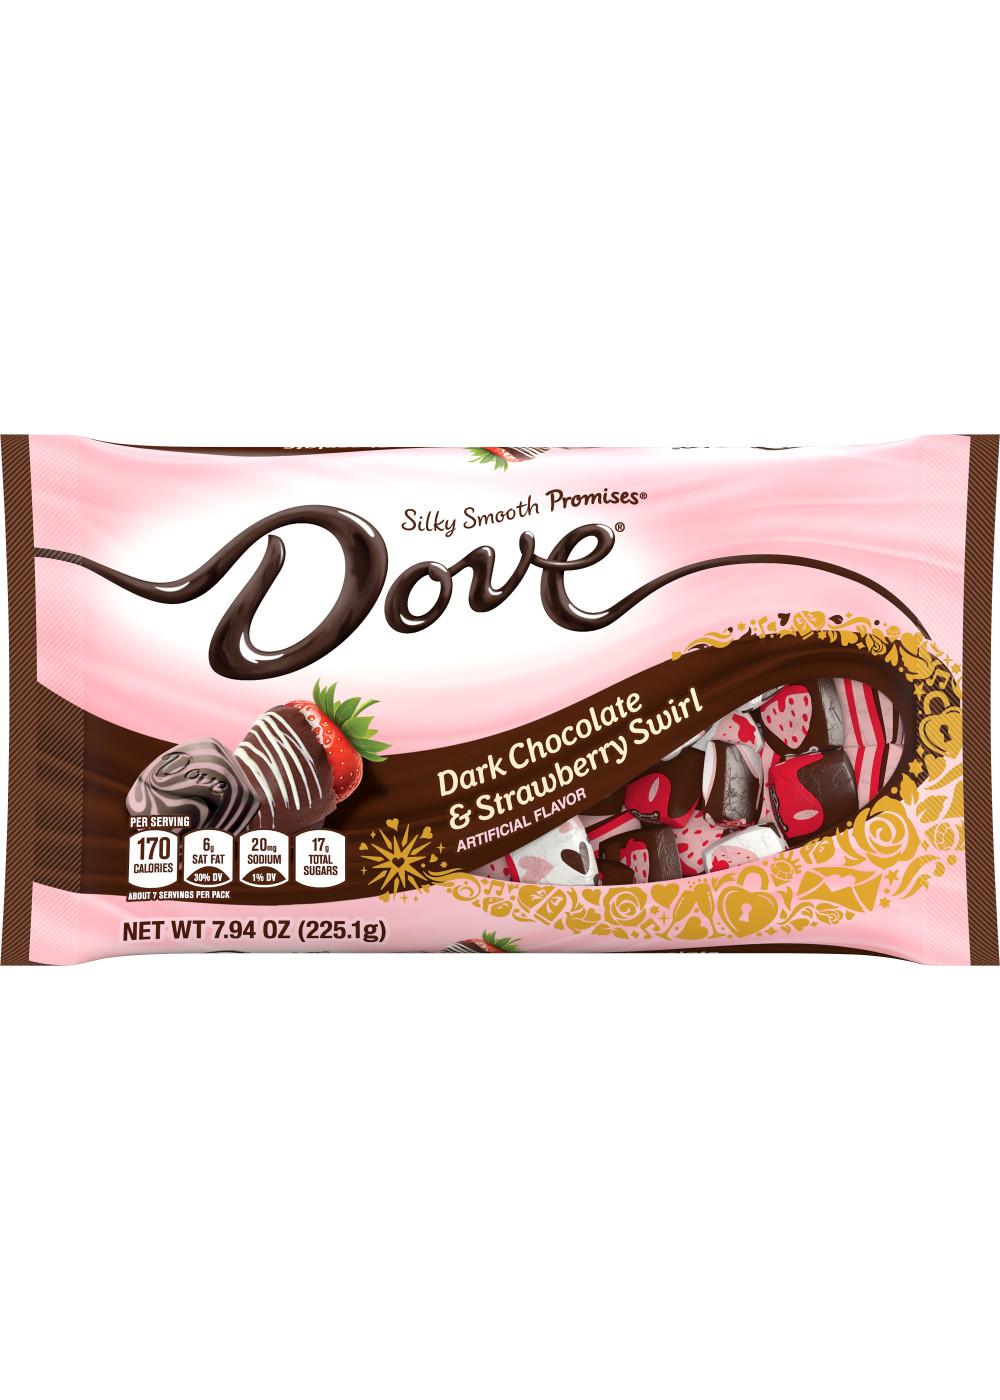 Dove Dark Chocolate & Strawberry Swirl Valentine's Candy; image 1 of 7